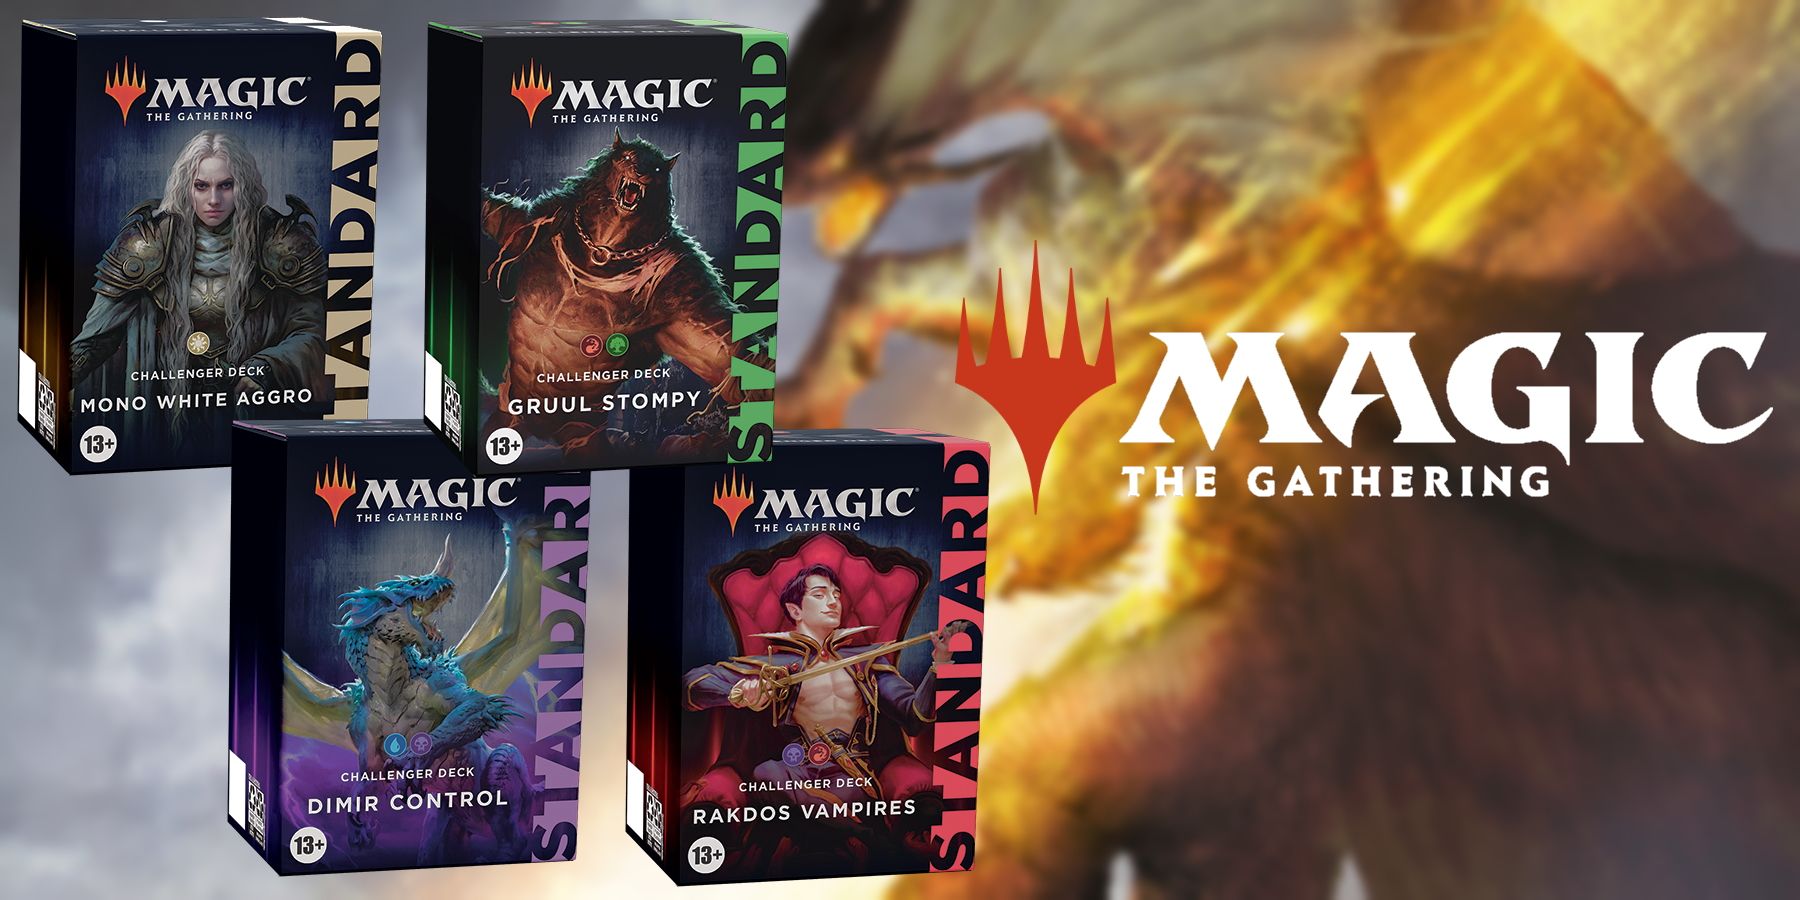 magic-the-gathering-challenger-decks-2022